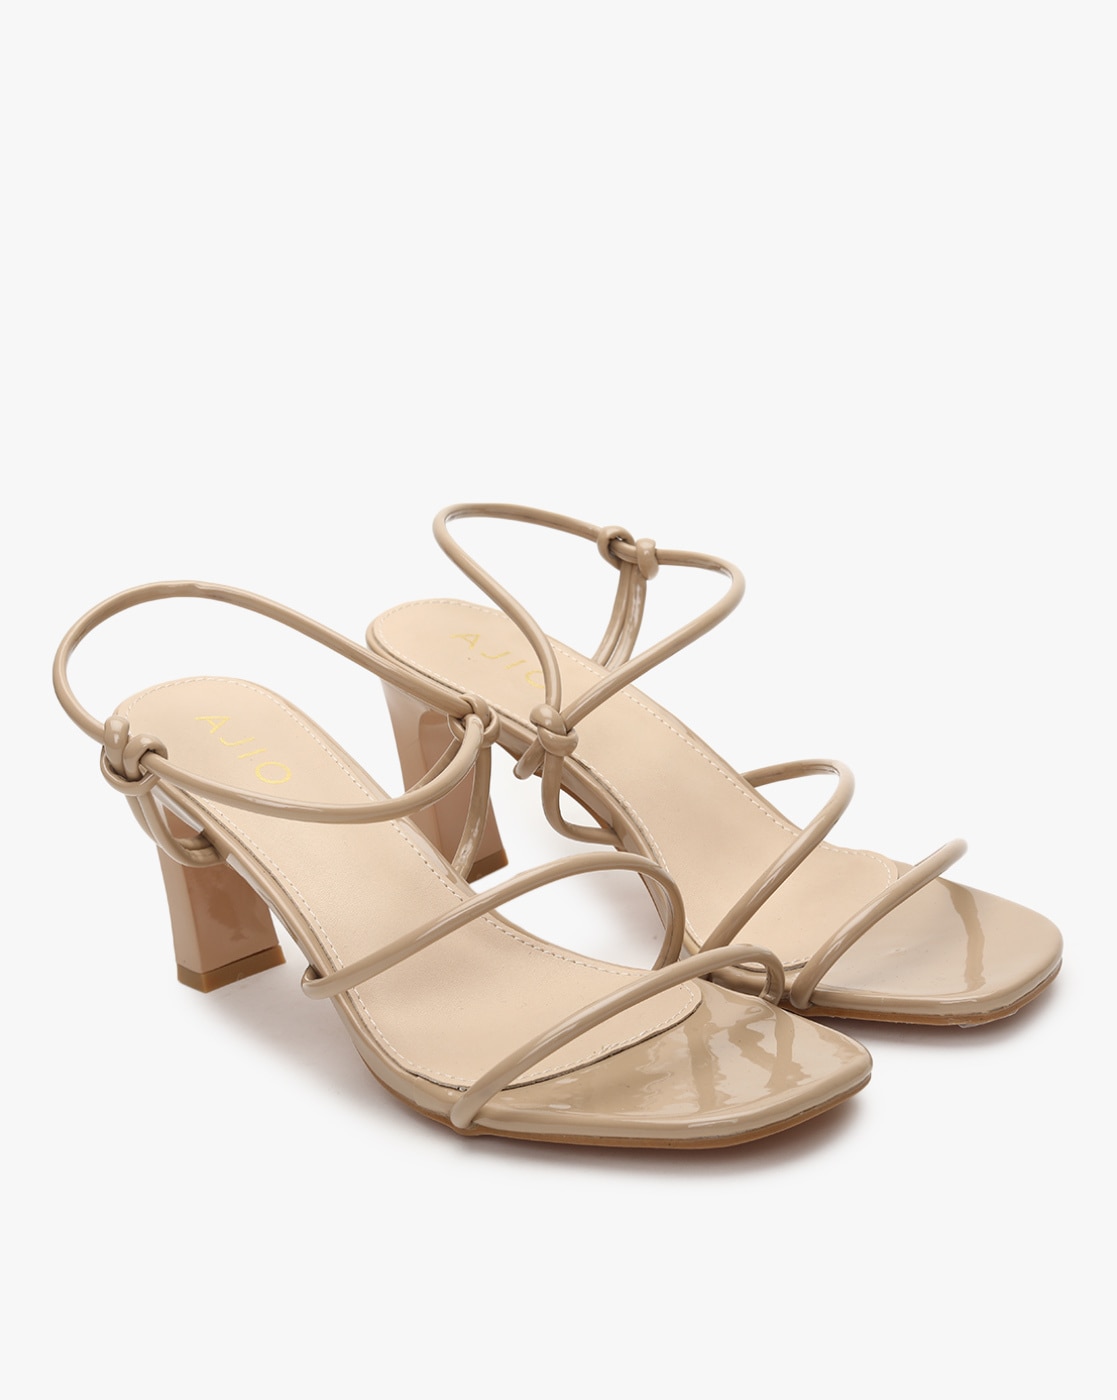 Buy Beige Heeled Sandals for Women by AJIO Online